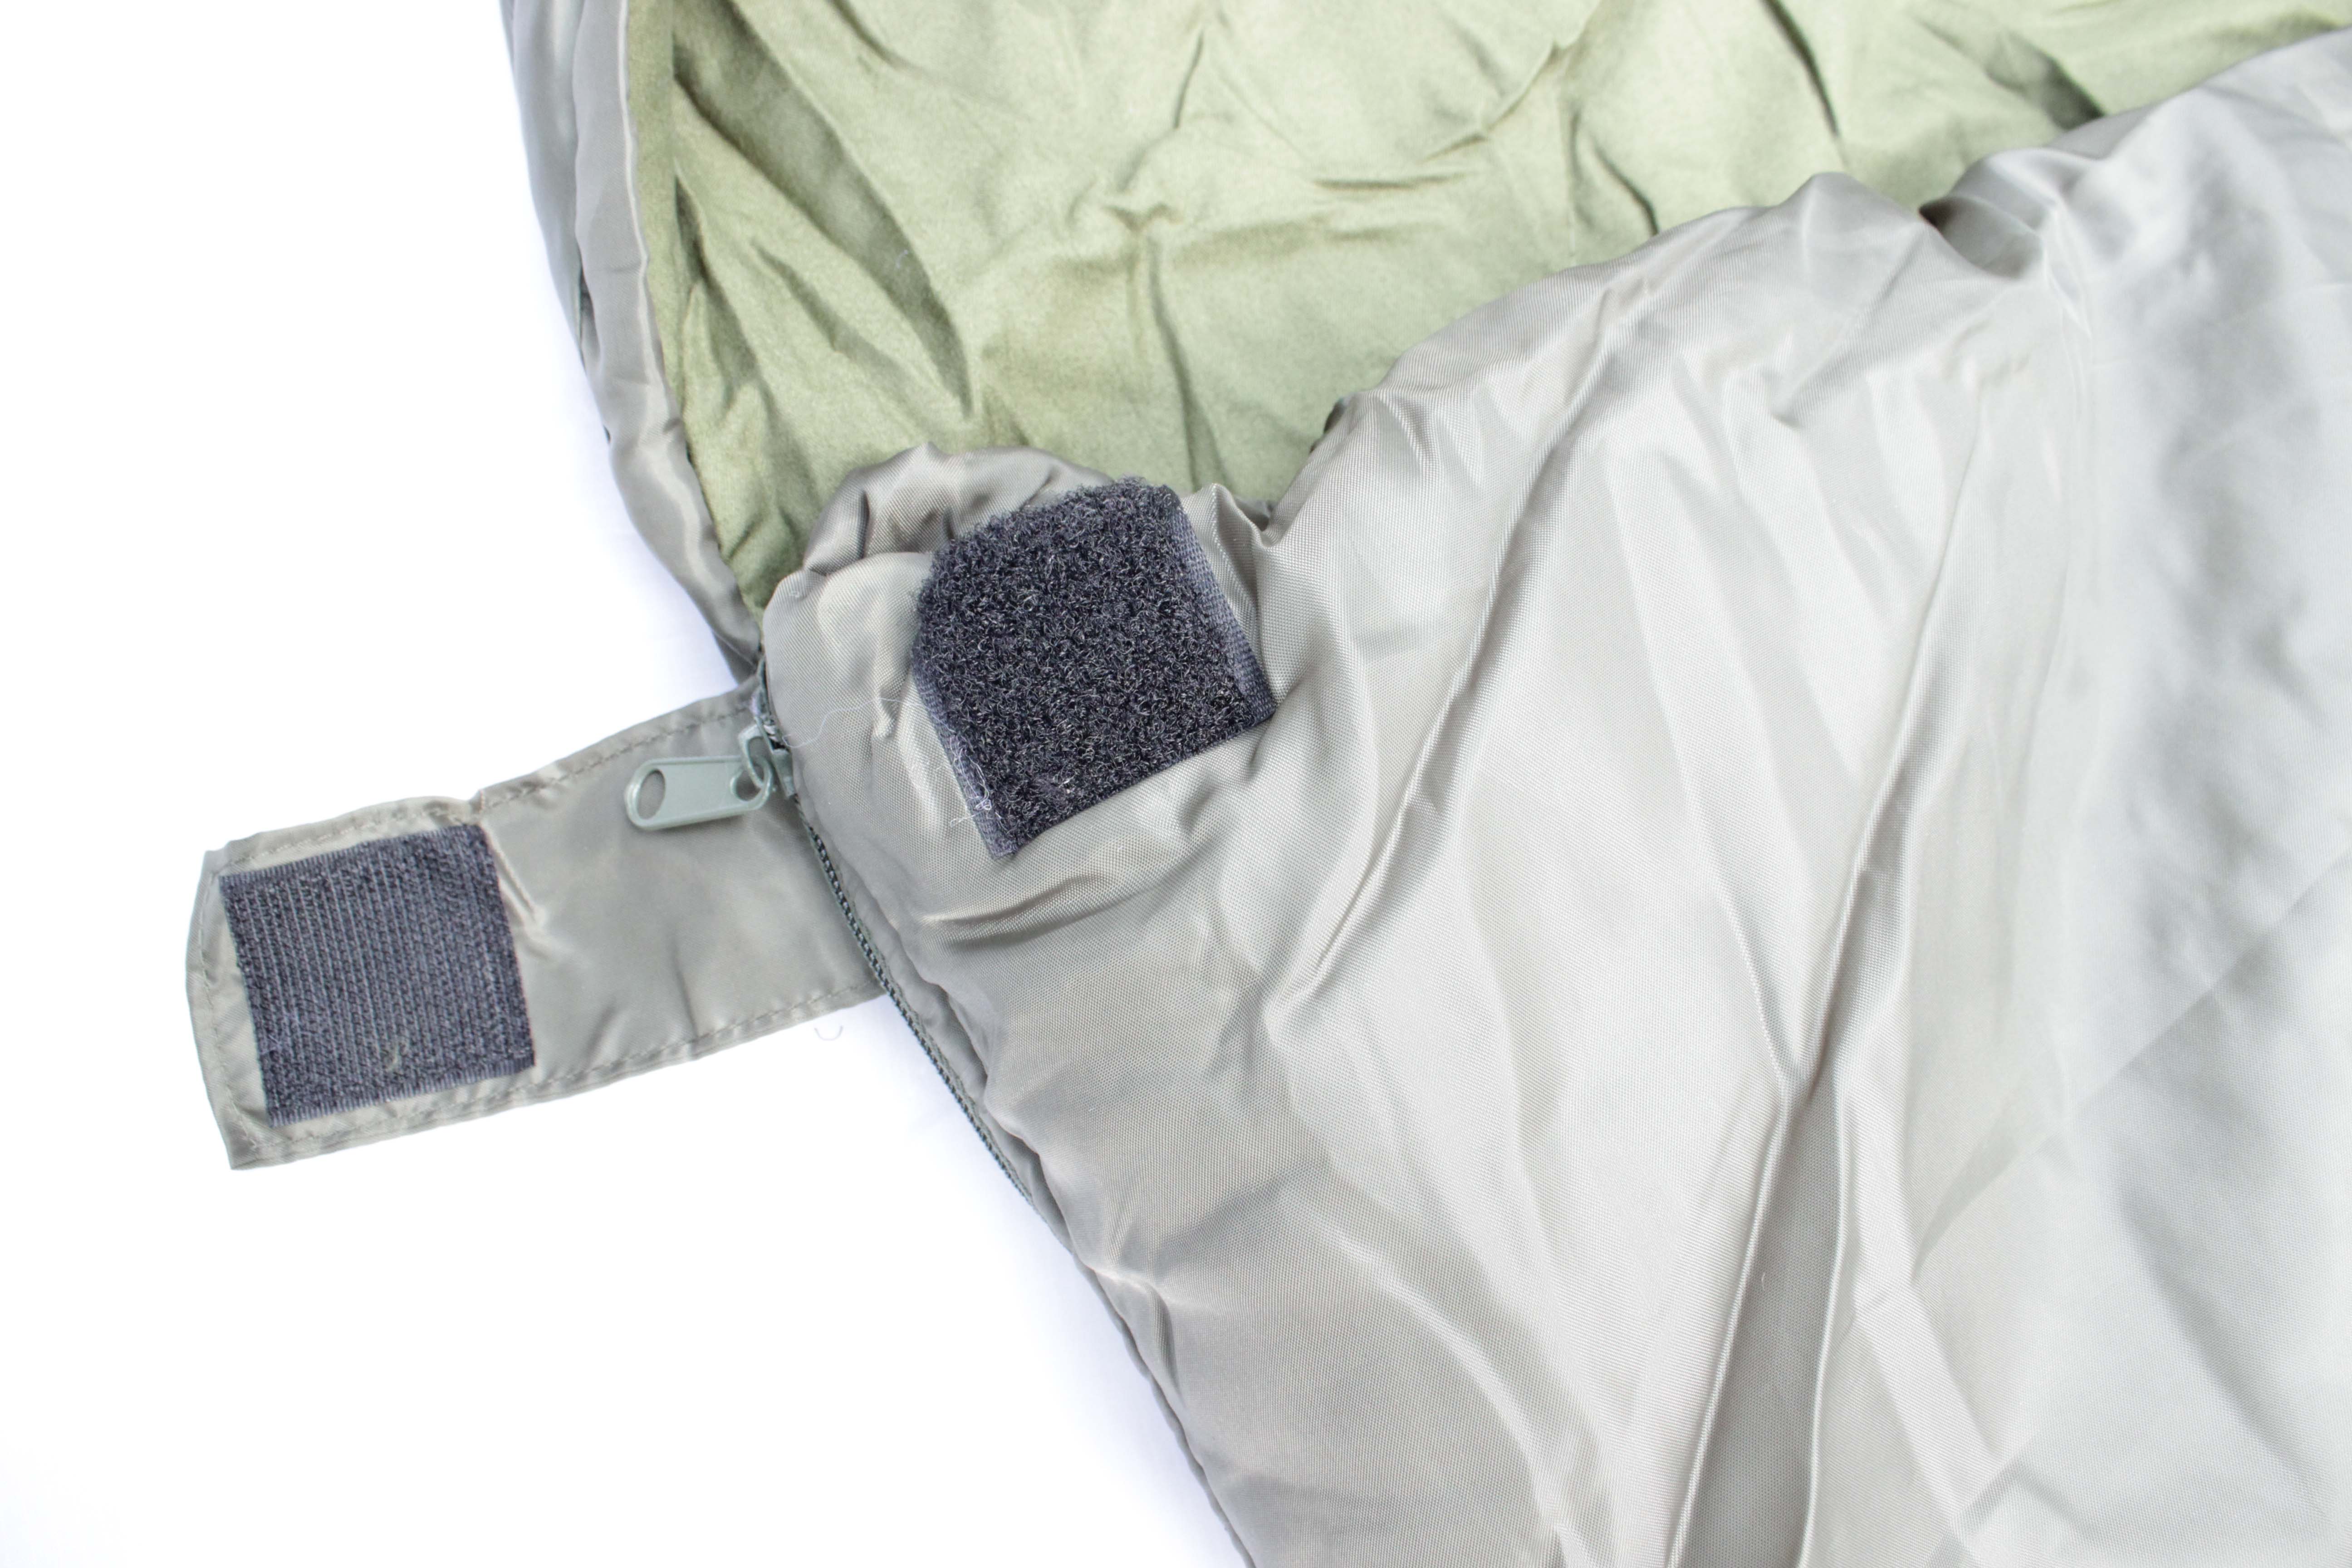 NaturGuard military army green outdoor camping Mummy sleeping bag 